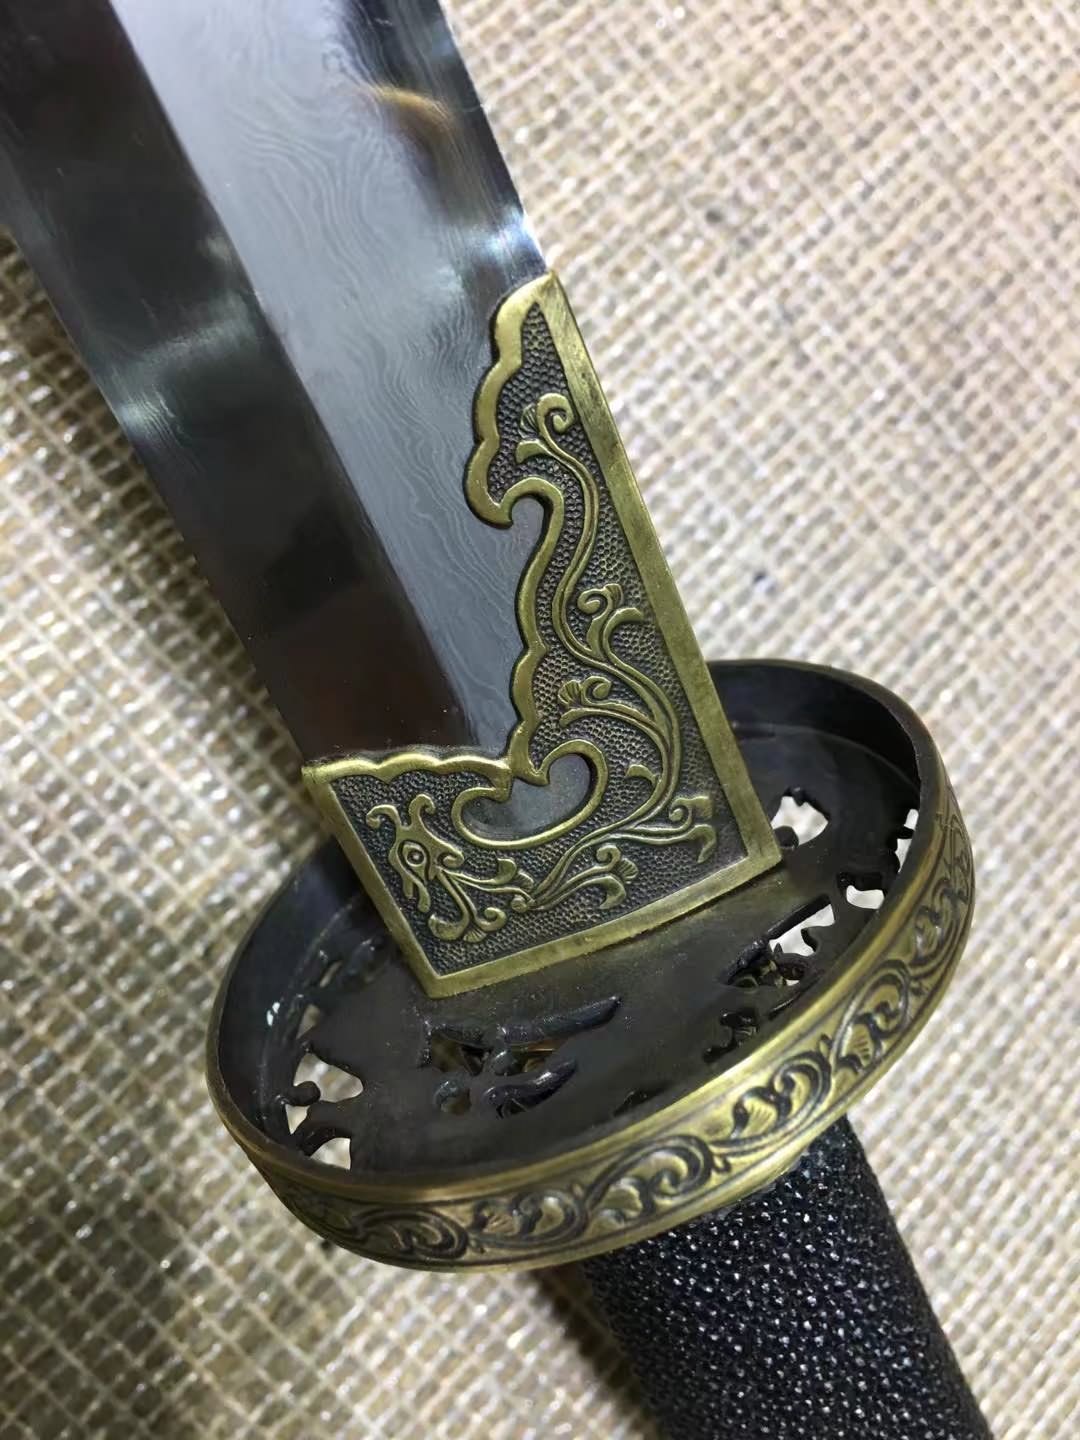 Broadsword(Damascus steel burn blade,Skin scabbard)Full tang,Length 38" - Chinese sword shop